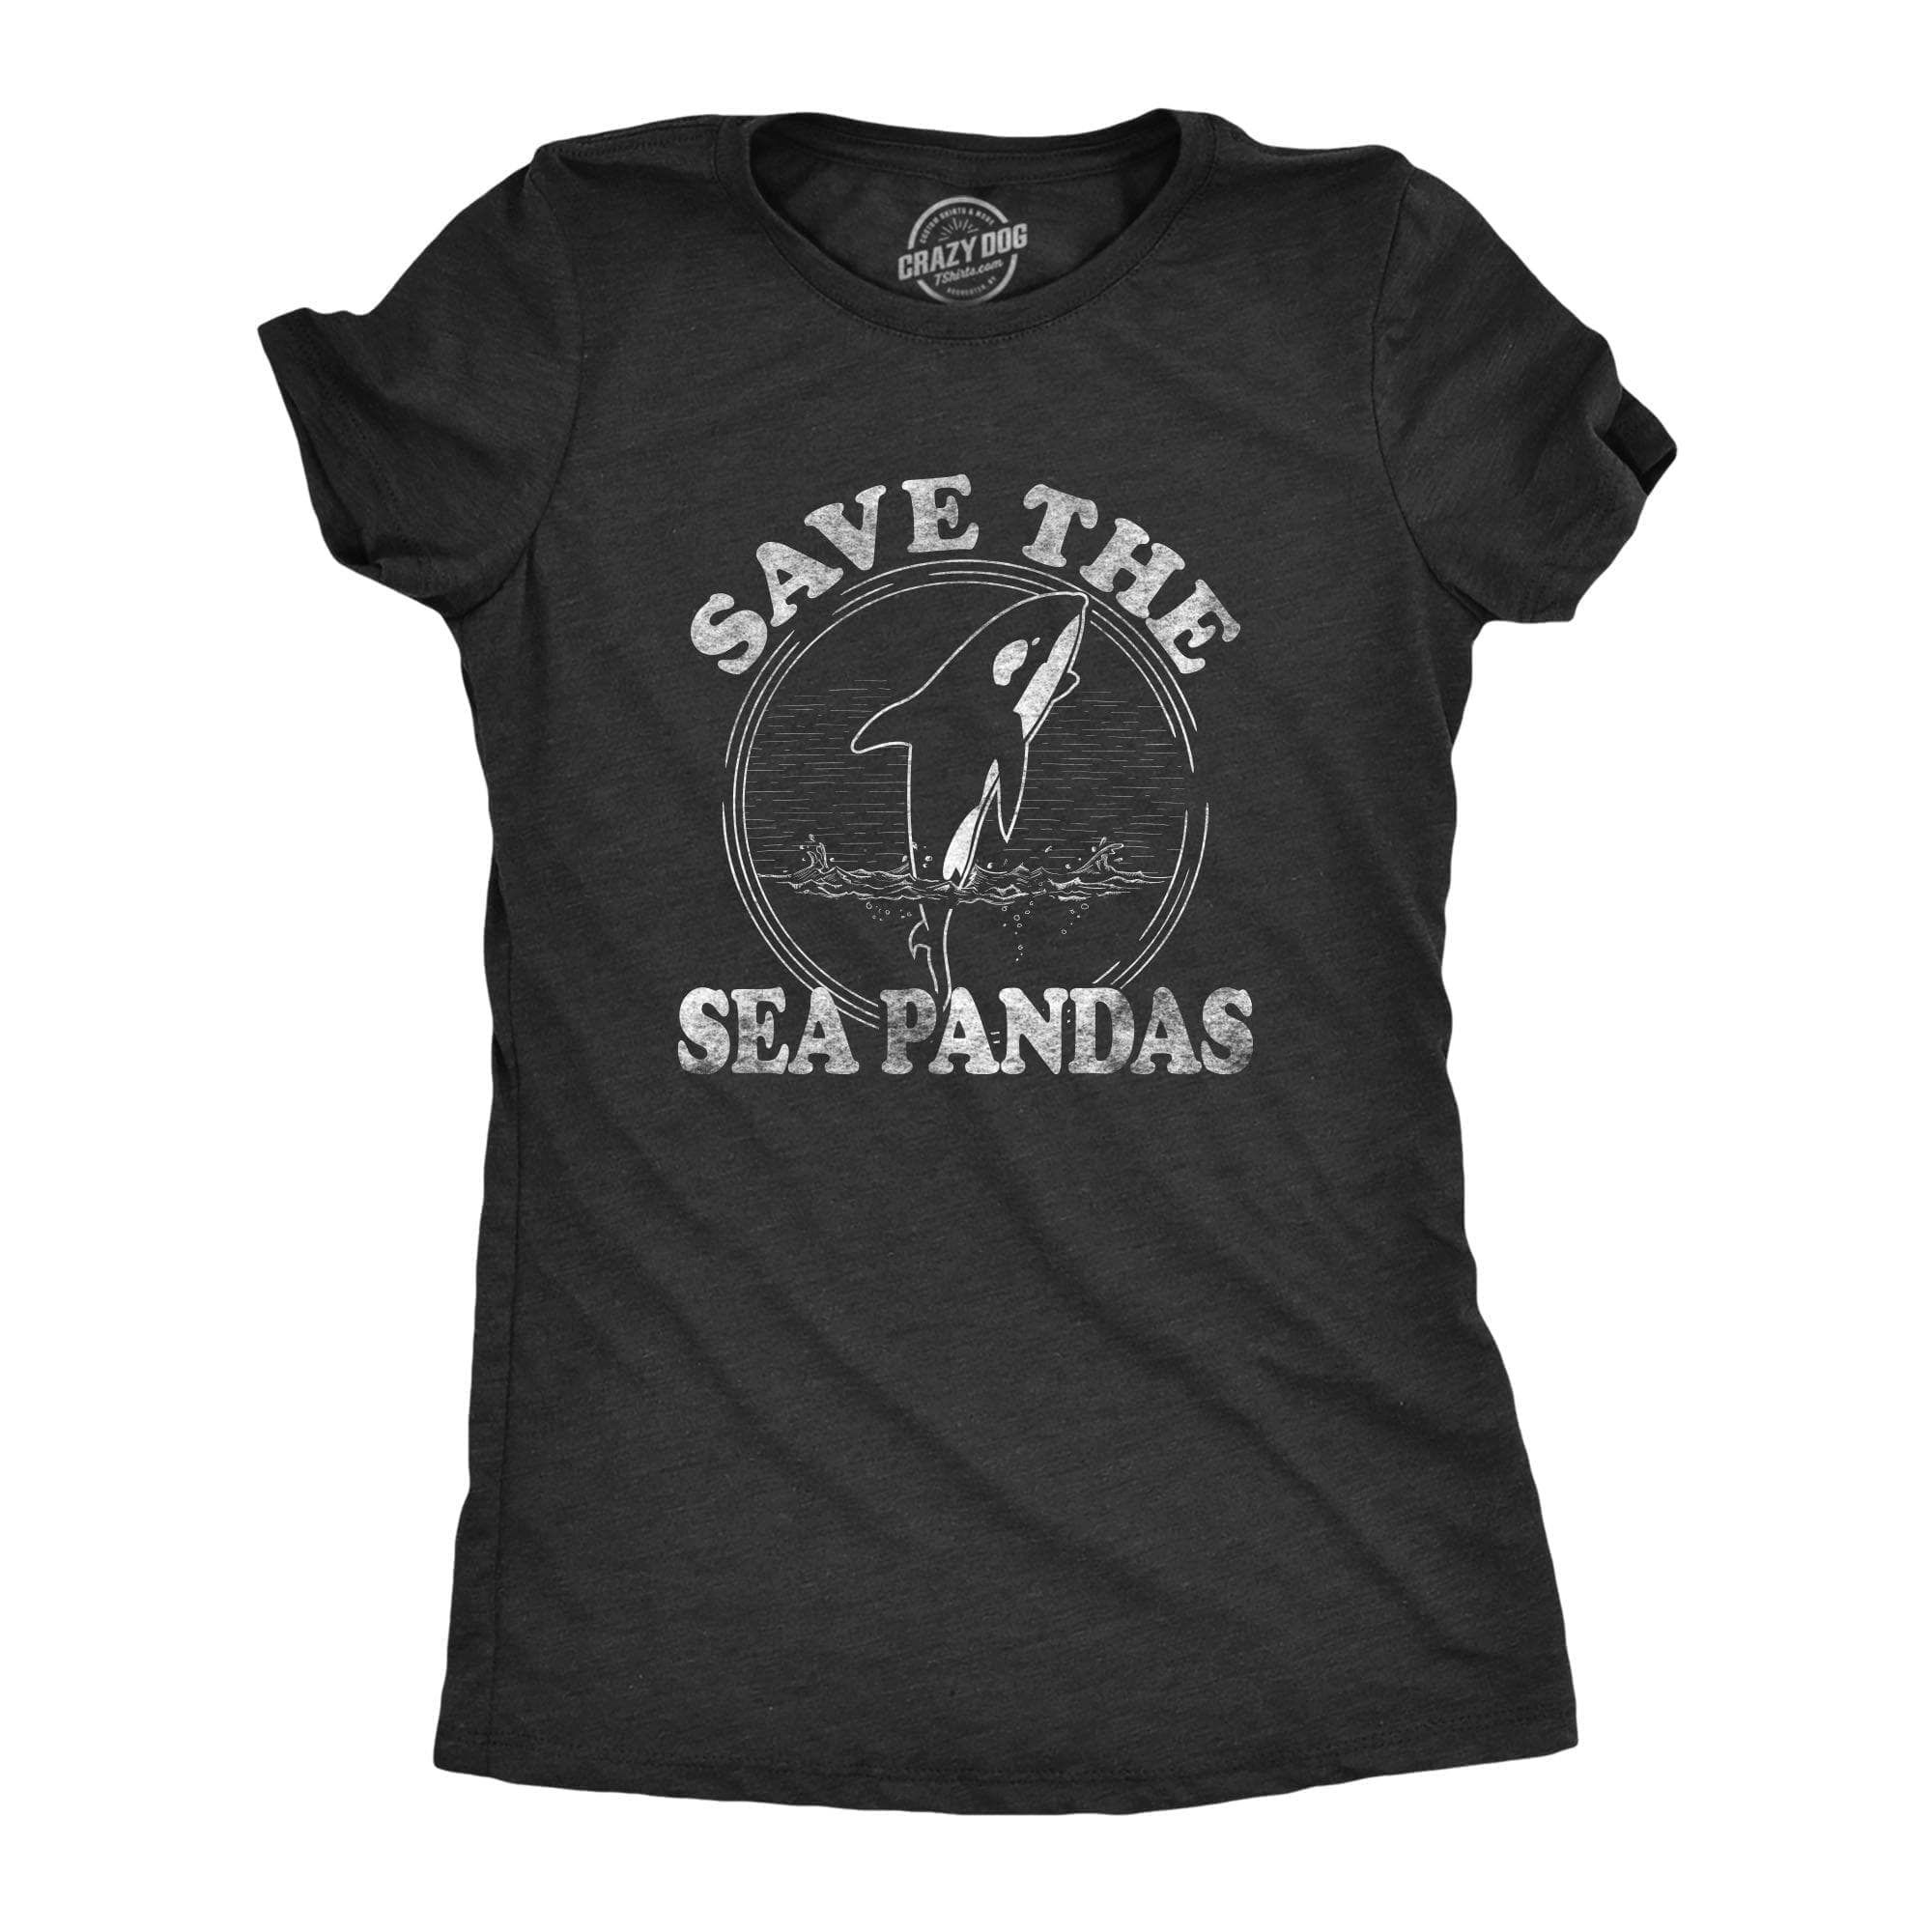 Save The Sea Pandas Women's Tshirt  -  Crazy Dog T-Shirts